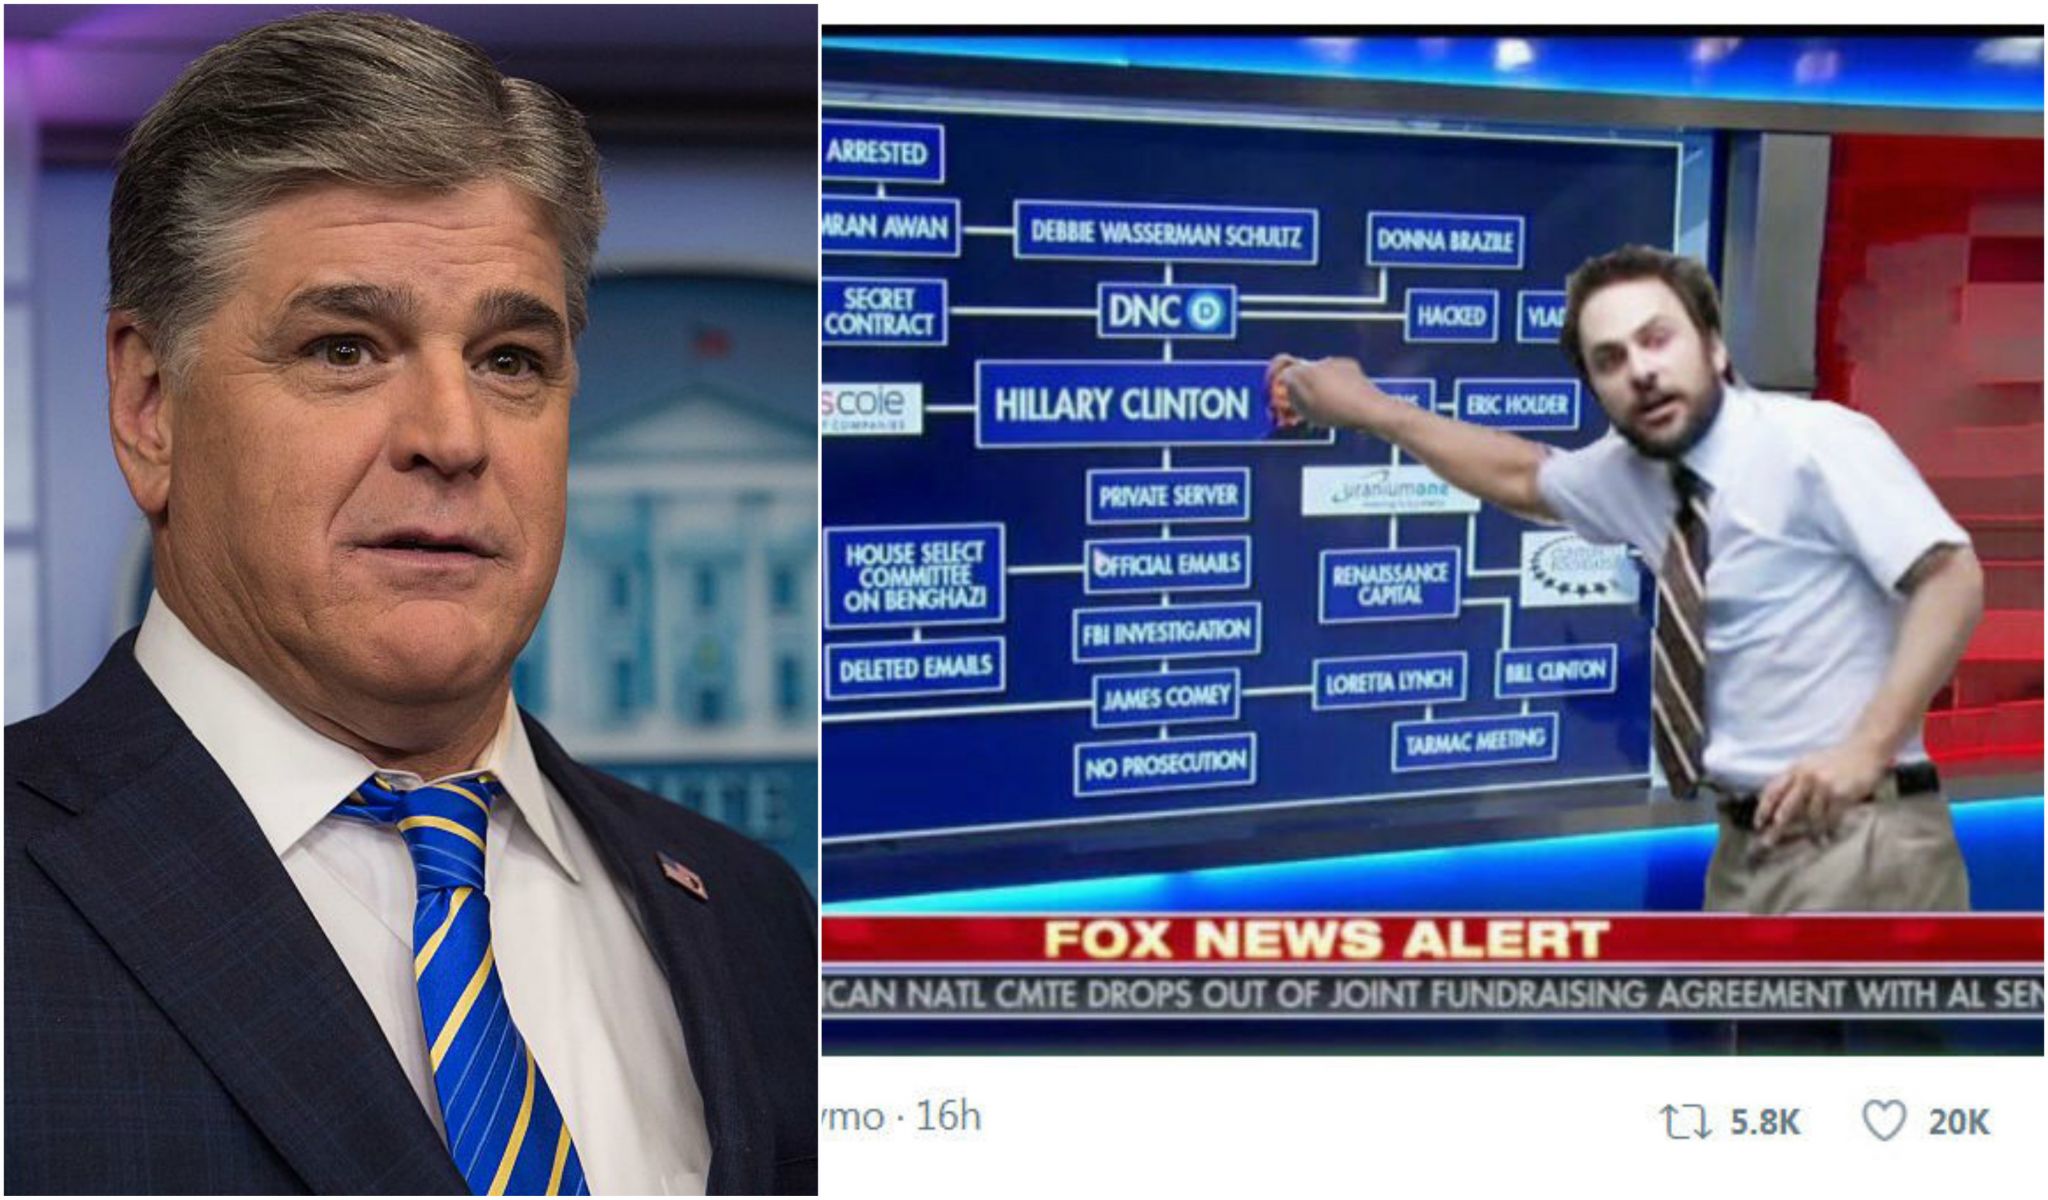 Sean Hannity's 'Clinton conspiracy theory' board is a meme dream - Houston Chronicle2048 x 1200